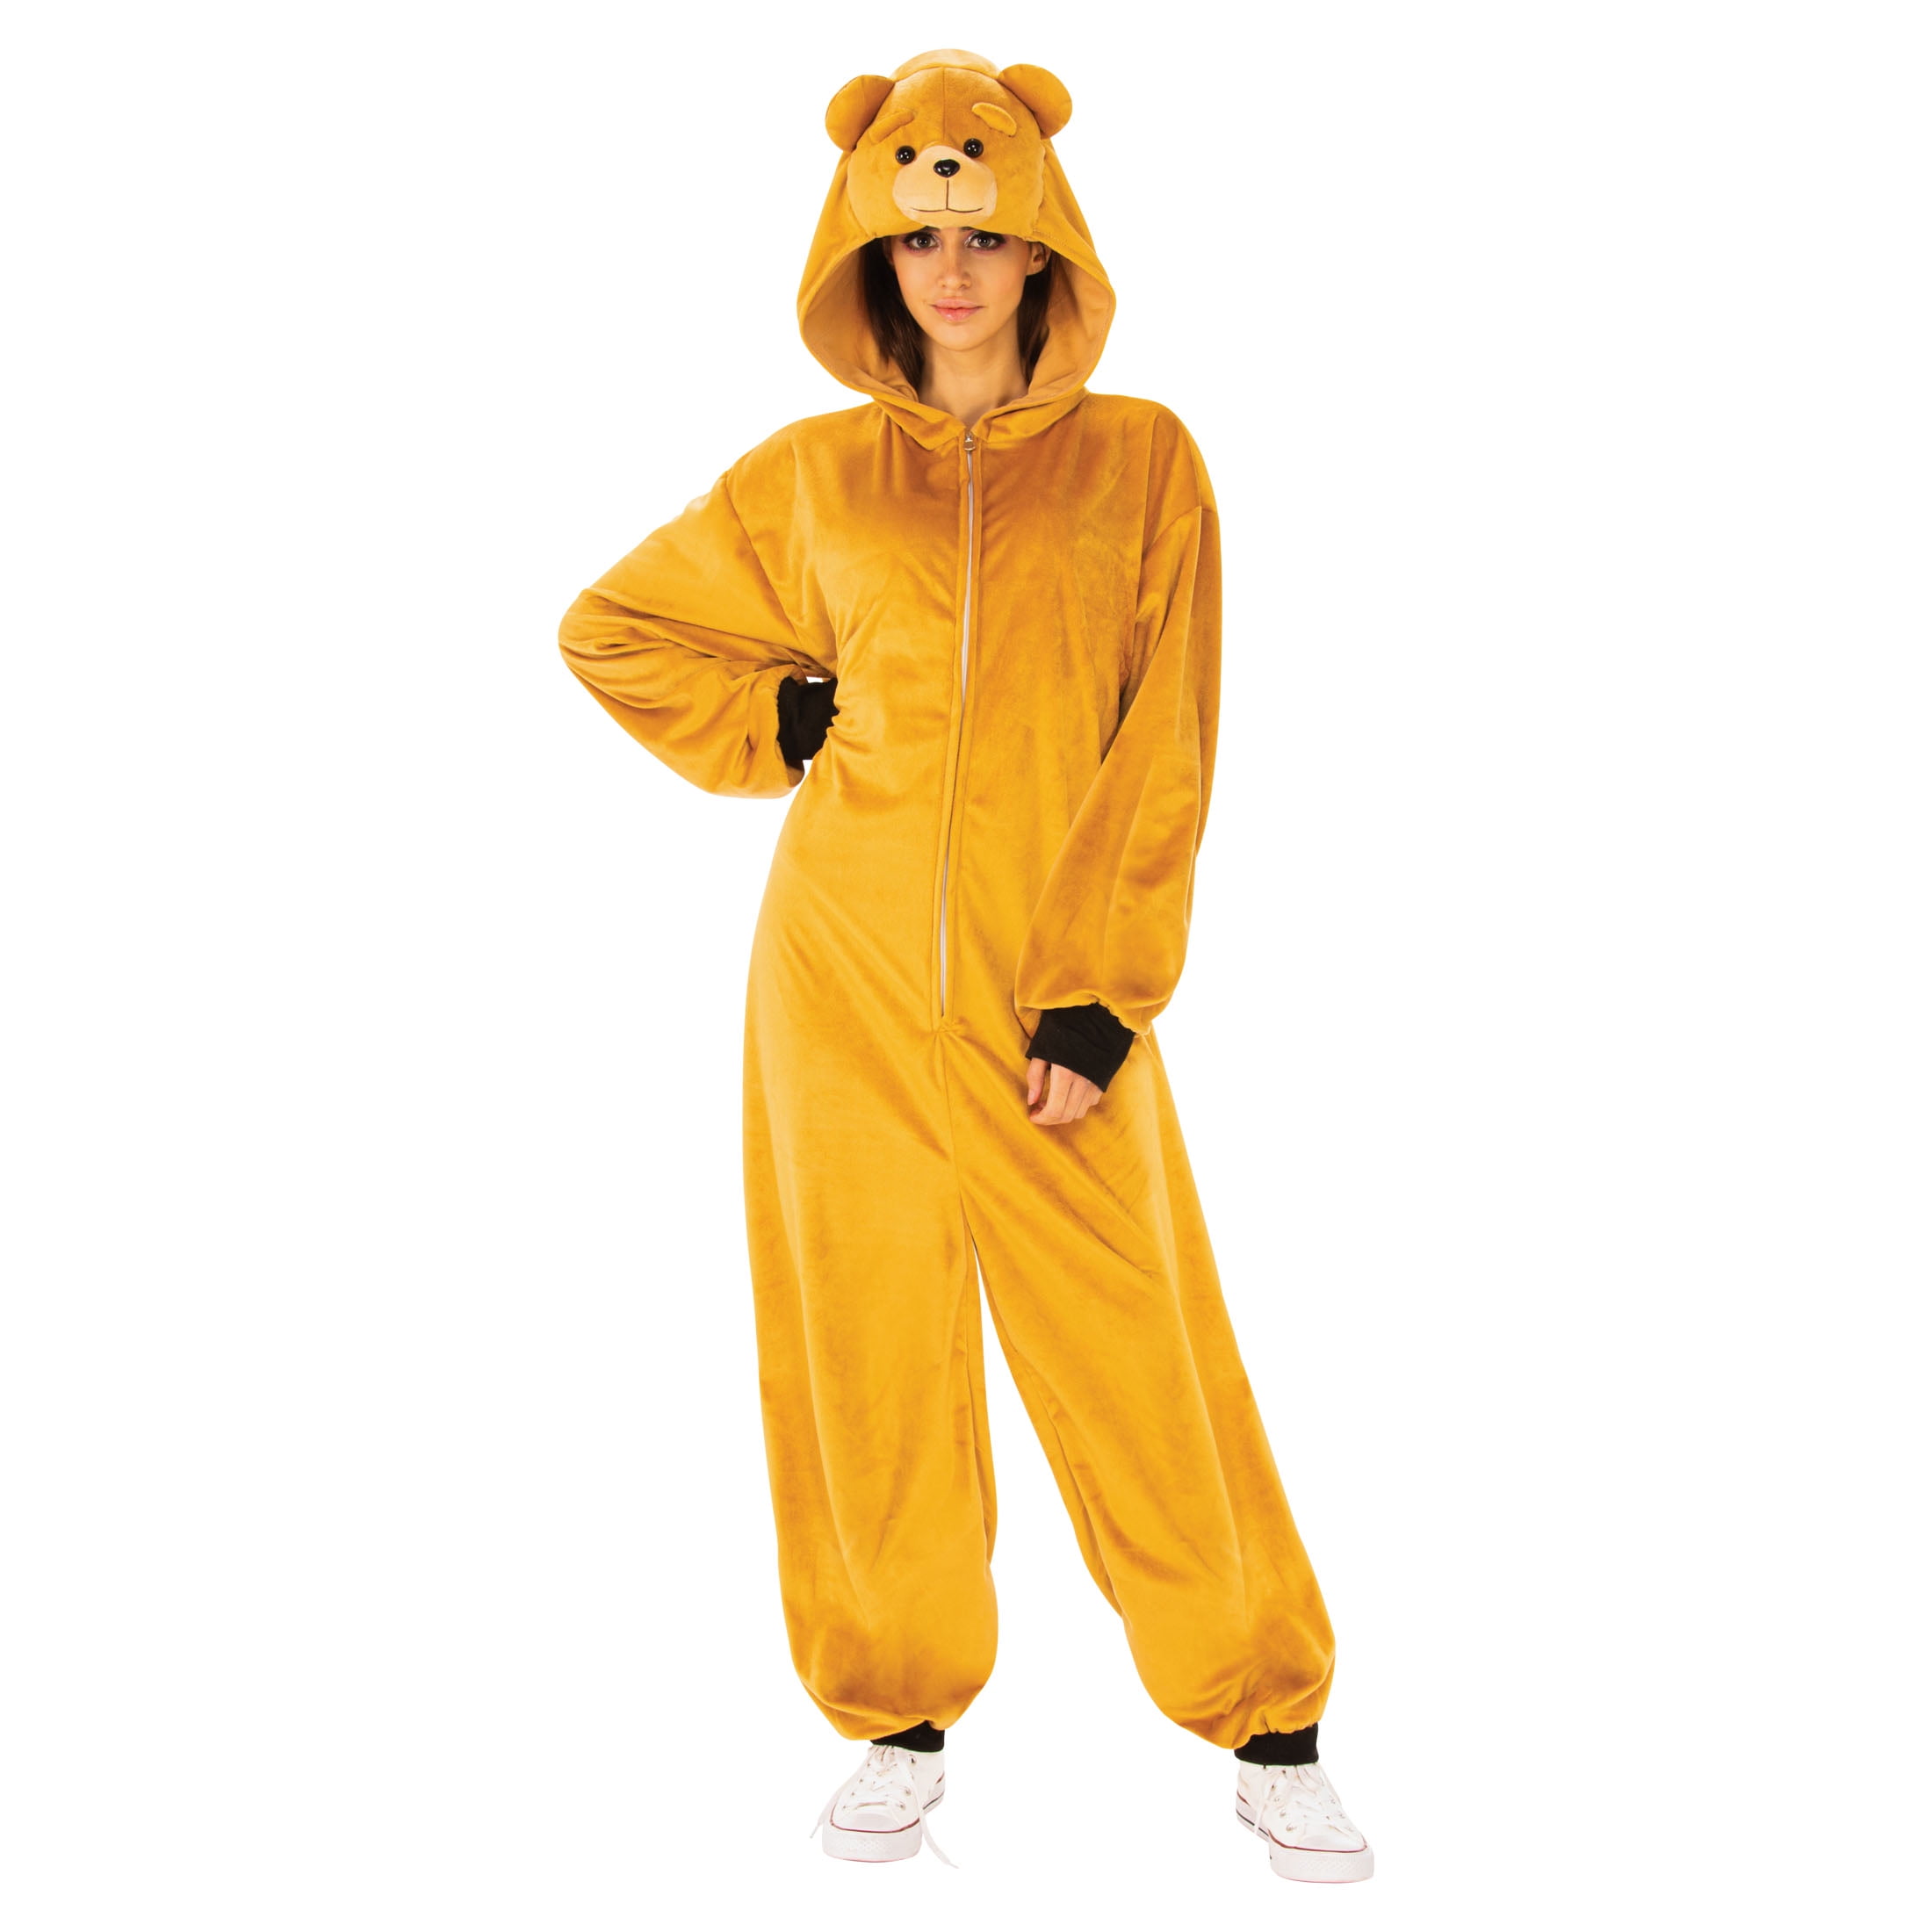 Bear Adult Unisex Halloween Costume by Rubies II - Walmart.com